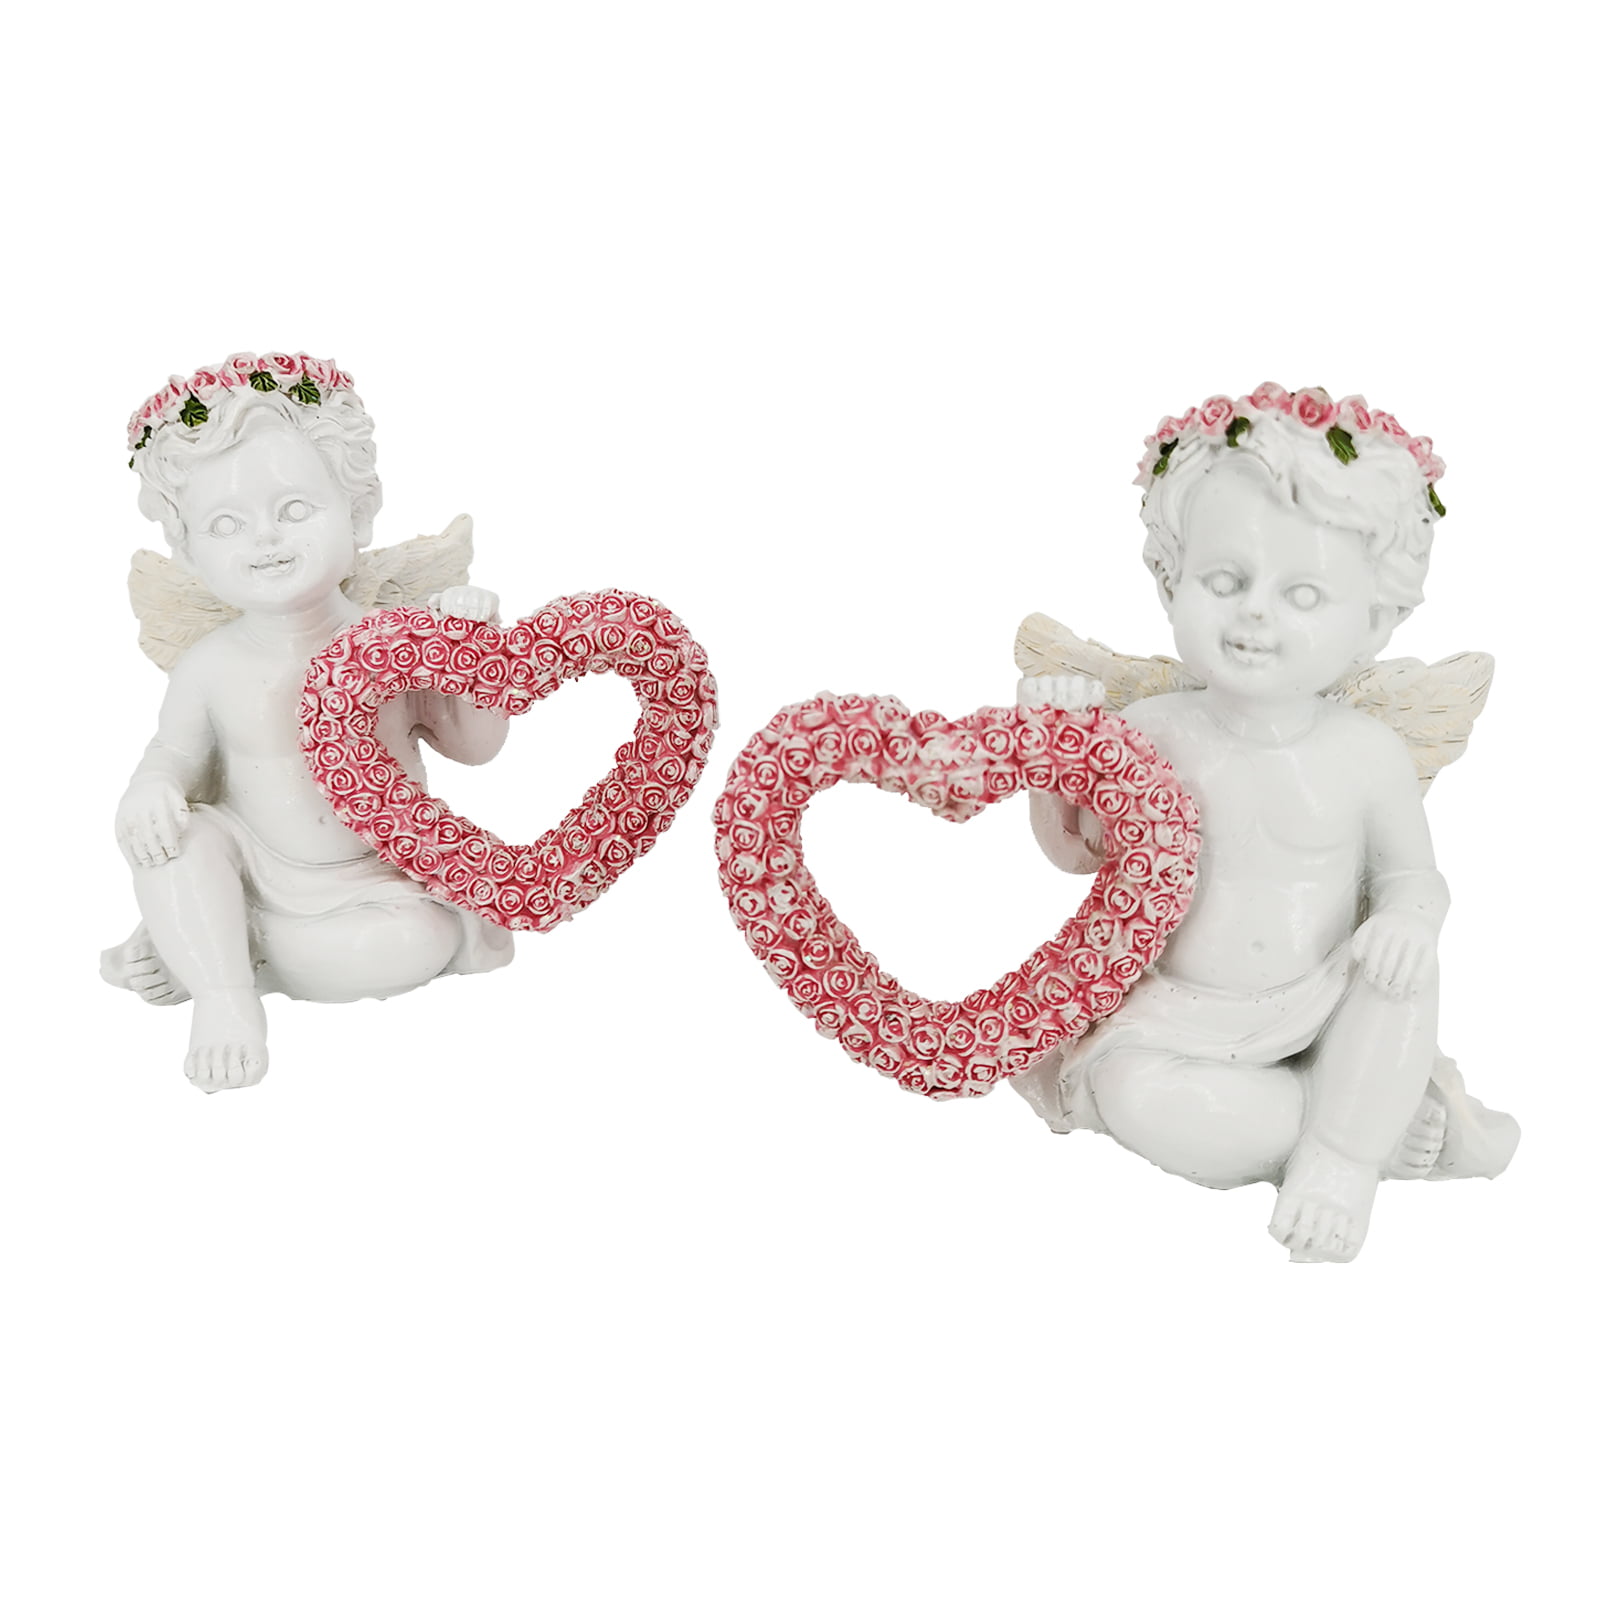 Cute Cherubs Angels Ornament Gift Love Heart Rose Figurine Statue Home Decor 